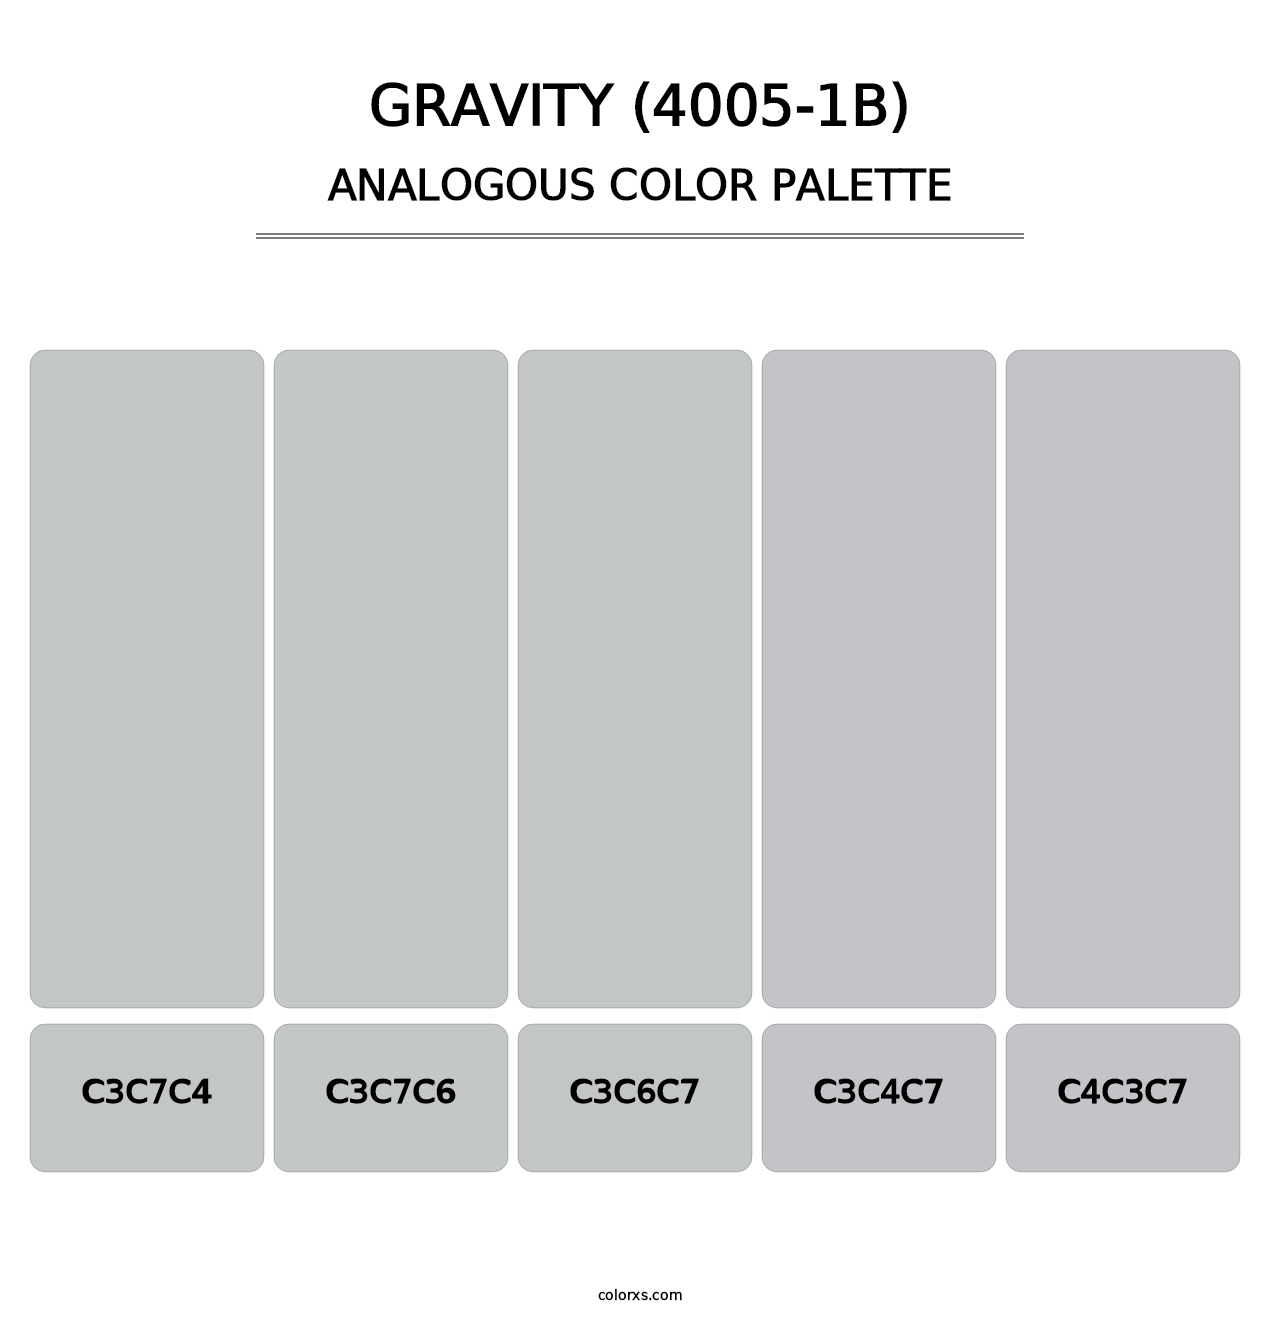 Gravity (4005-1B) - Analogous Color Palette